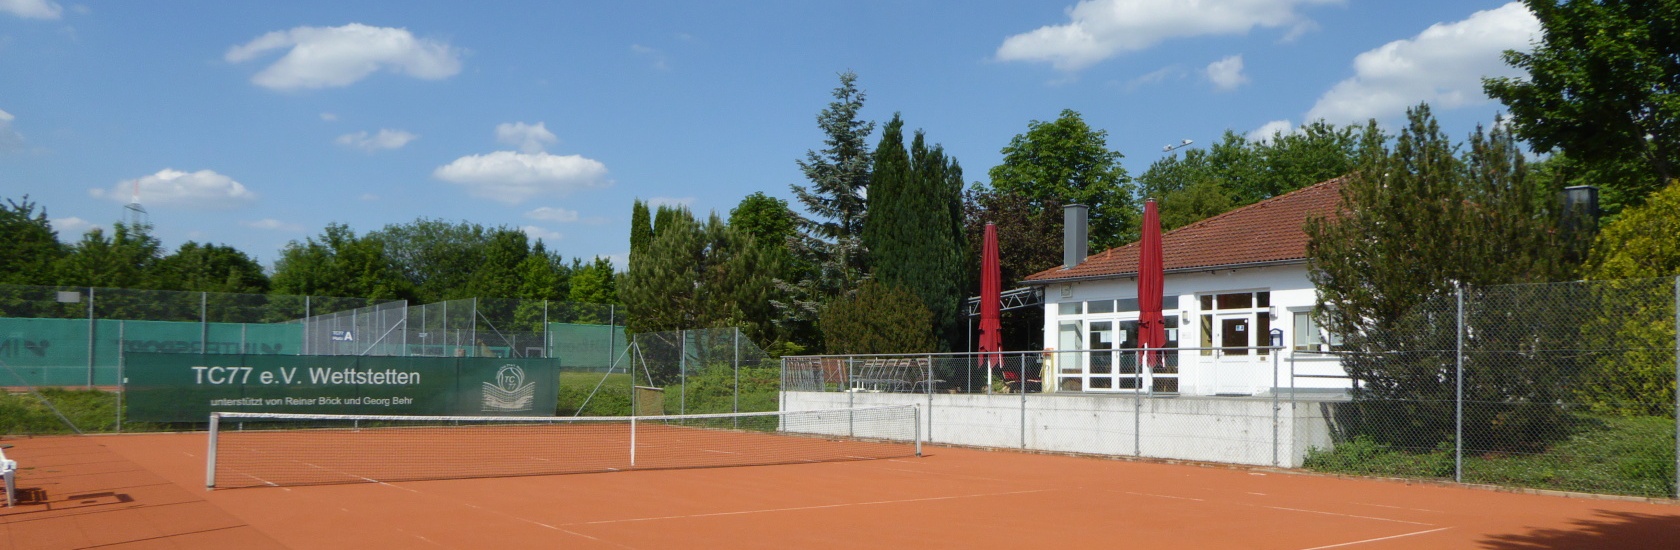 Tennis 4